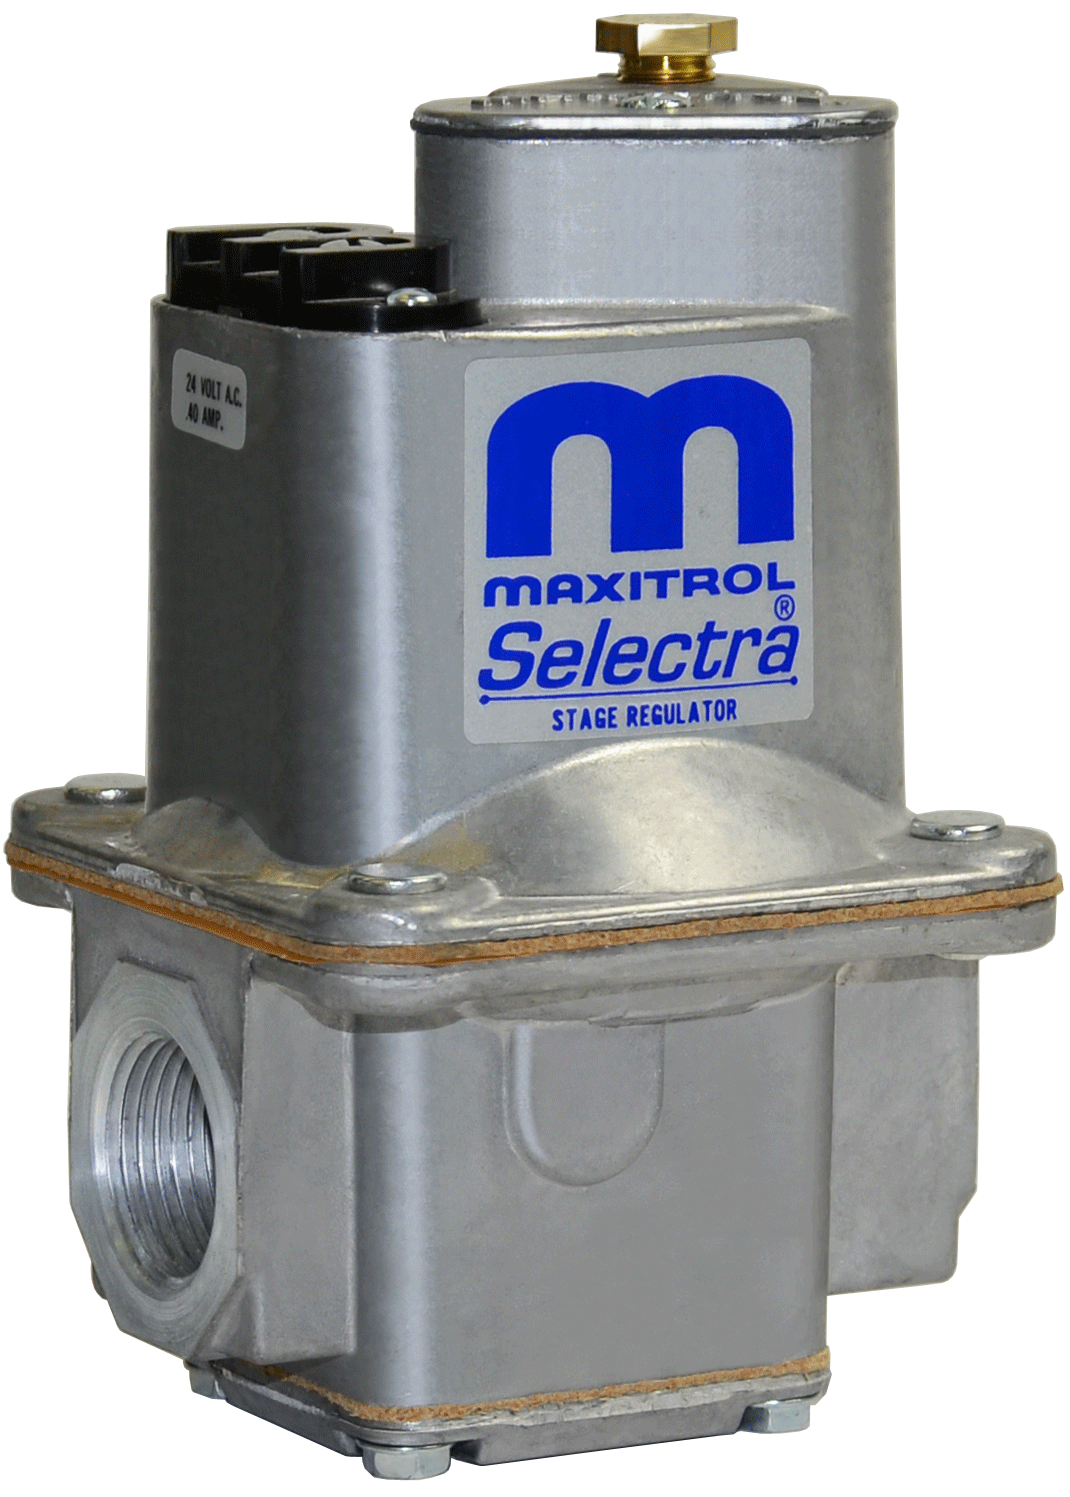 Maxitrol SR600W-1-3/4" Gas Regulator 2-Stage 3/4" NPT